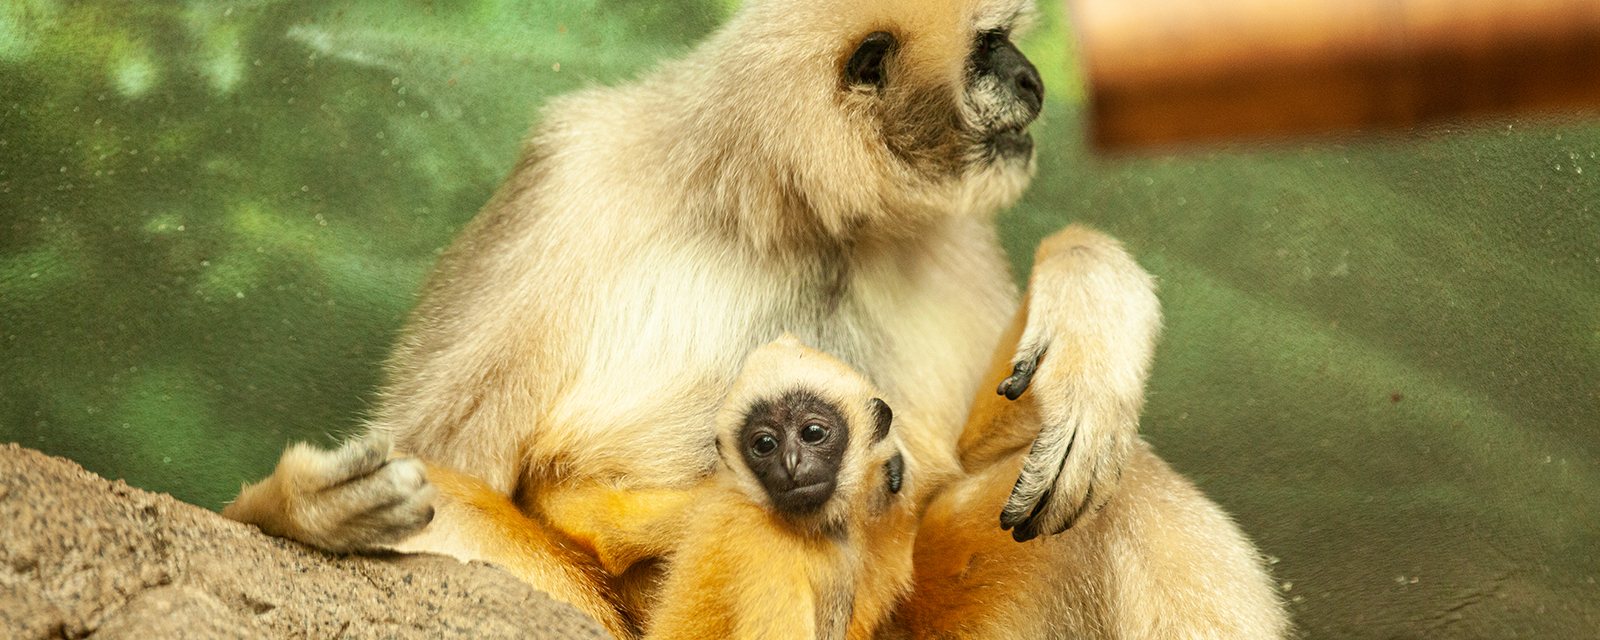 White-cheeked gibbon in exhibit